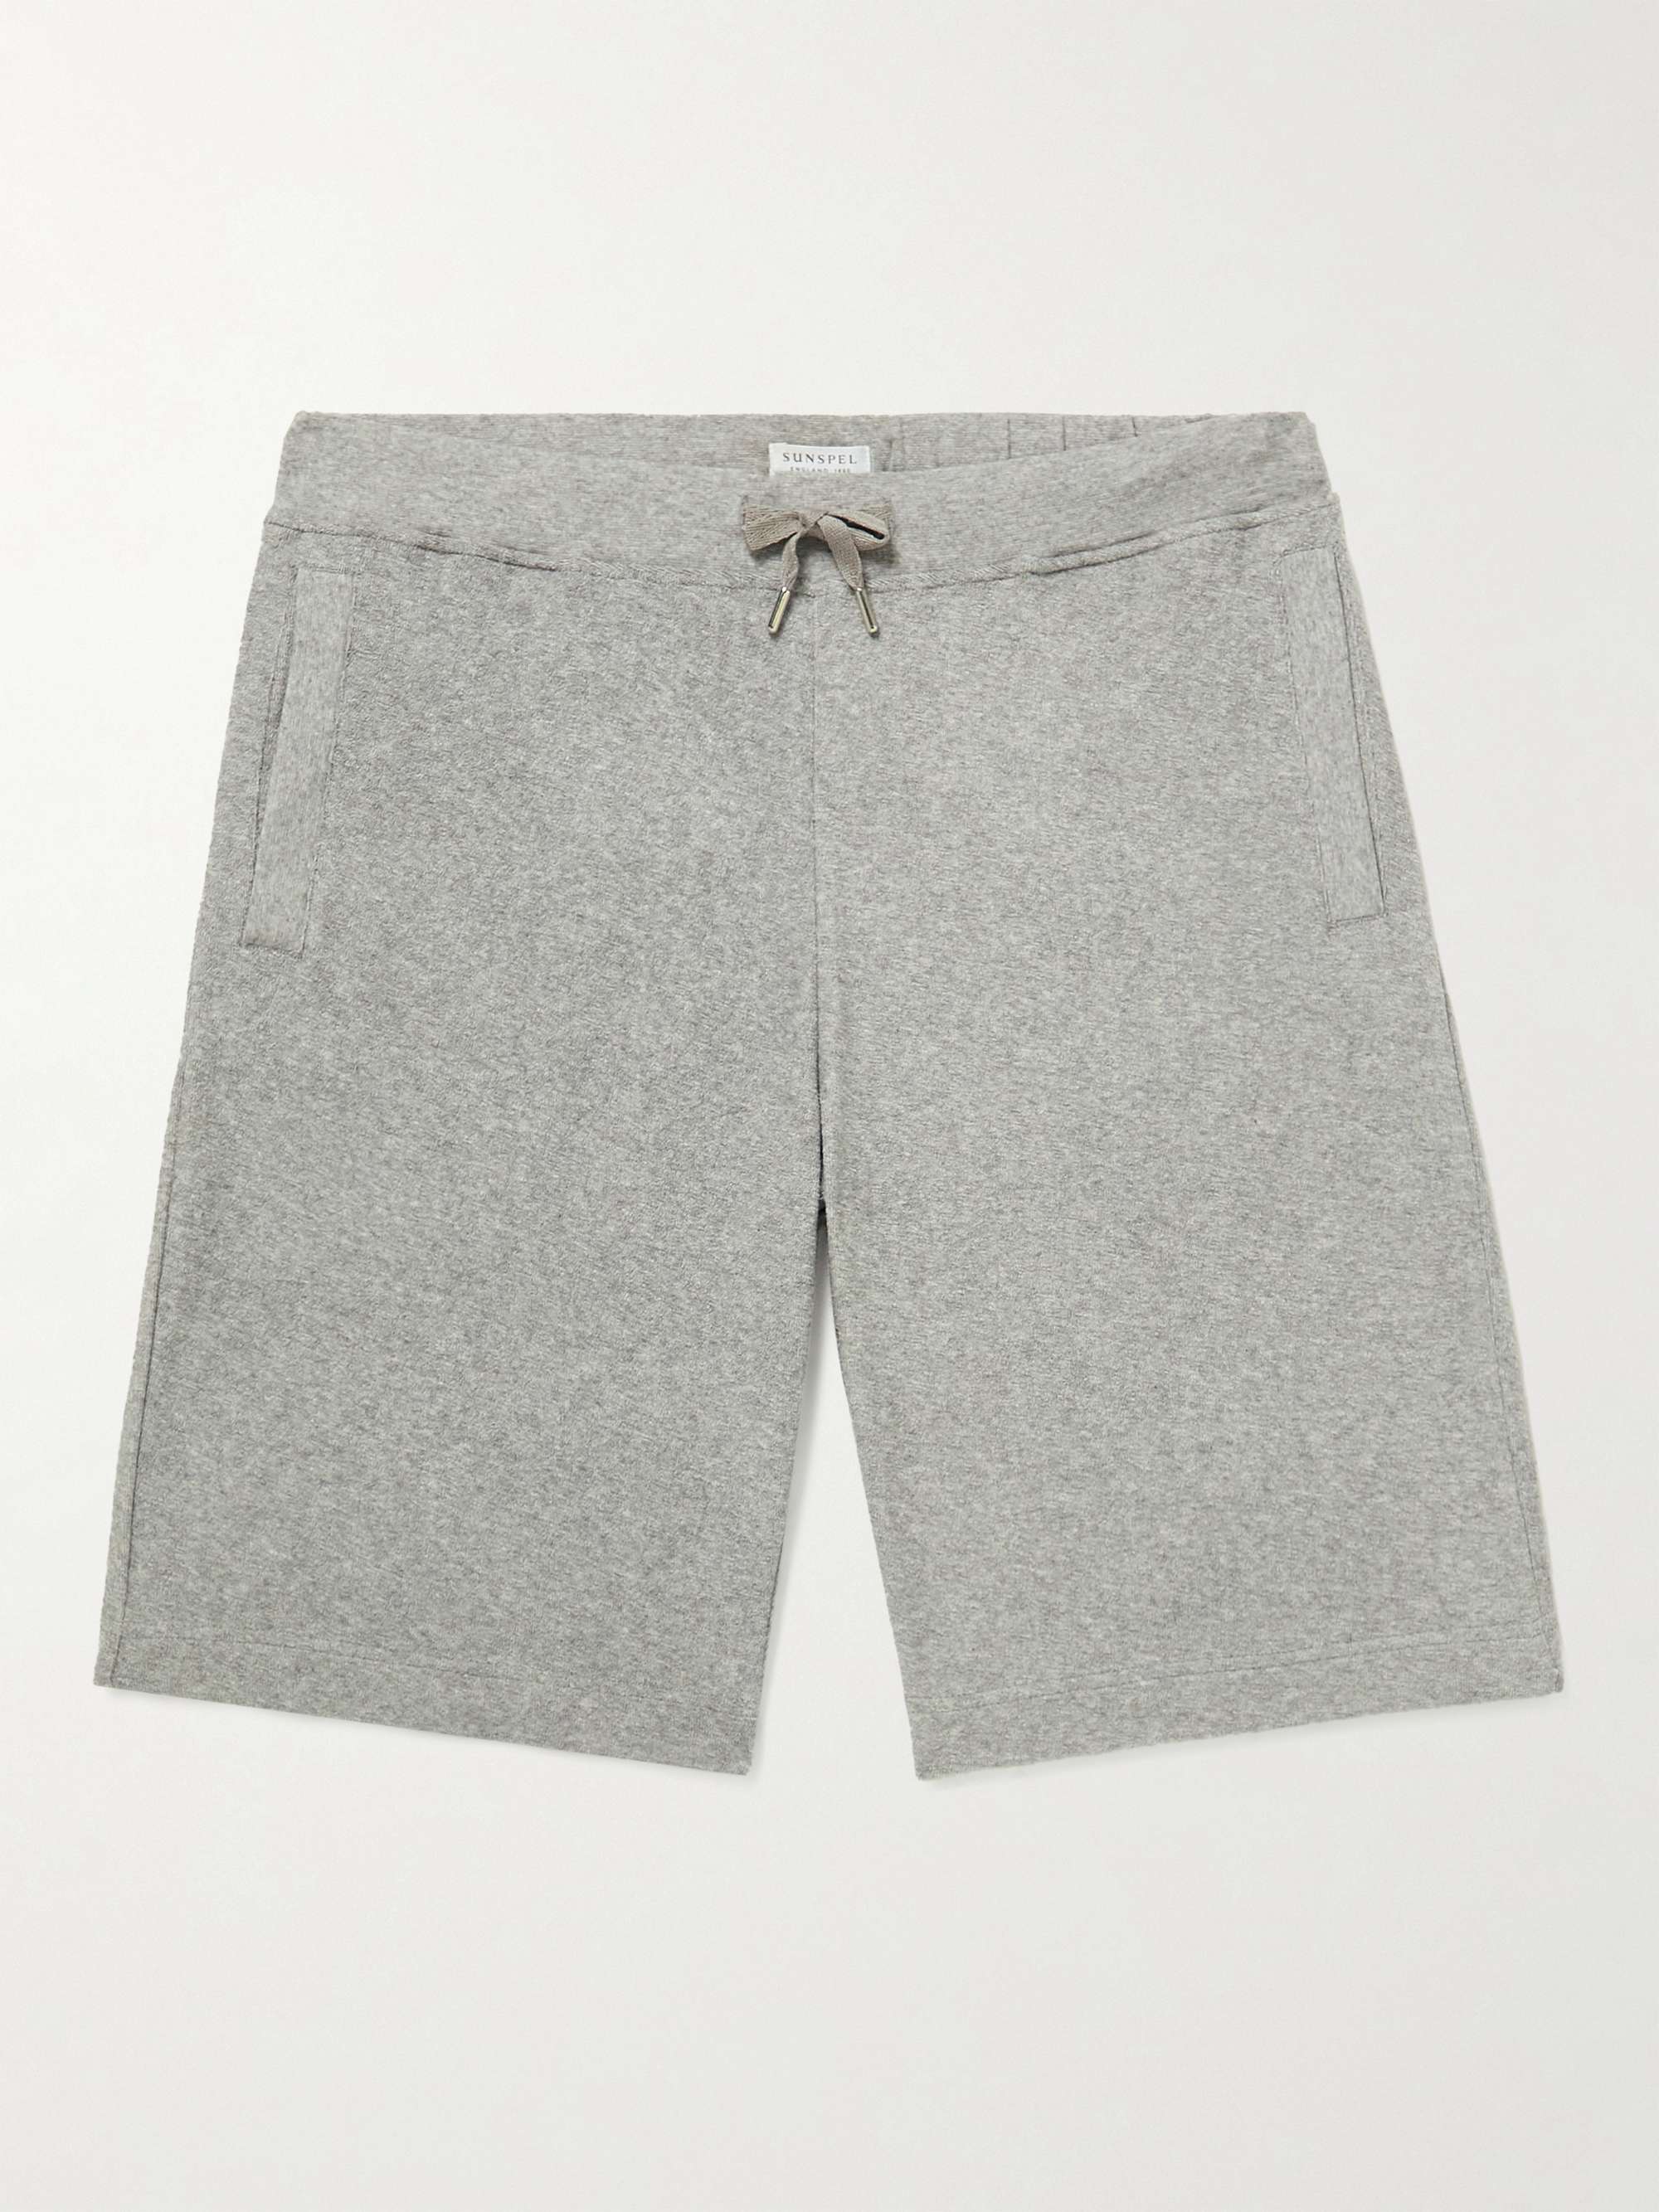 Benson Linen Solid Drawstring Shorts Gray NWT $135 